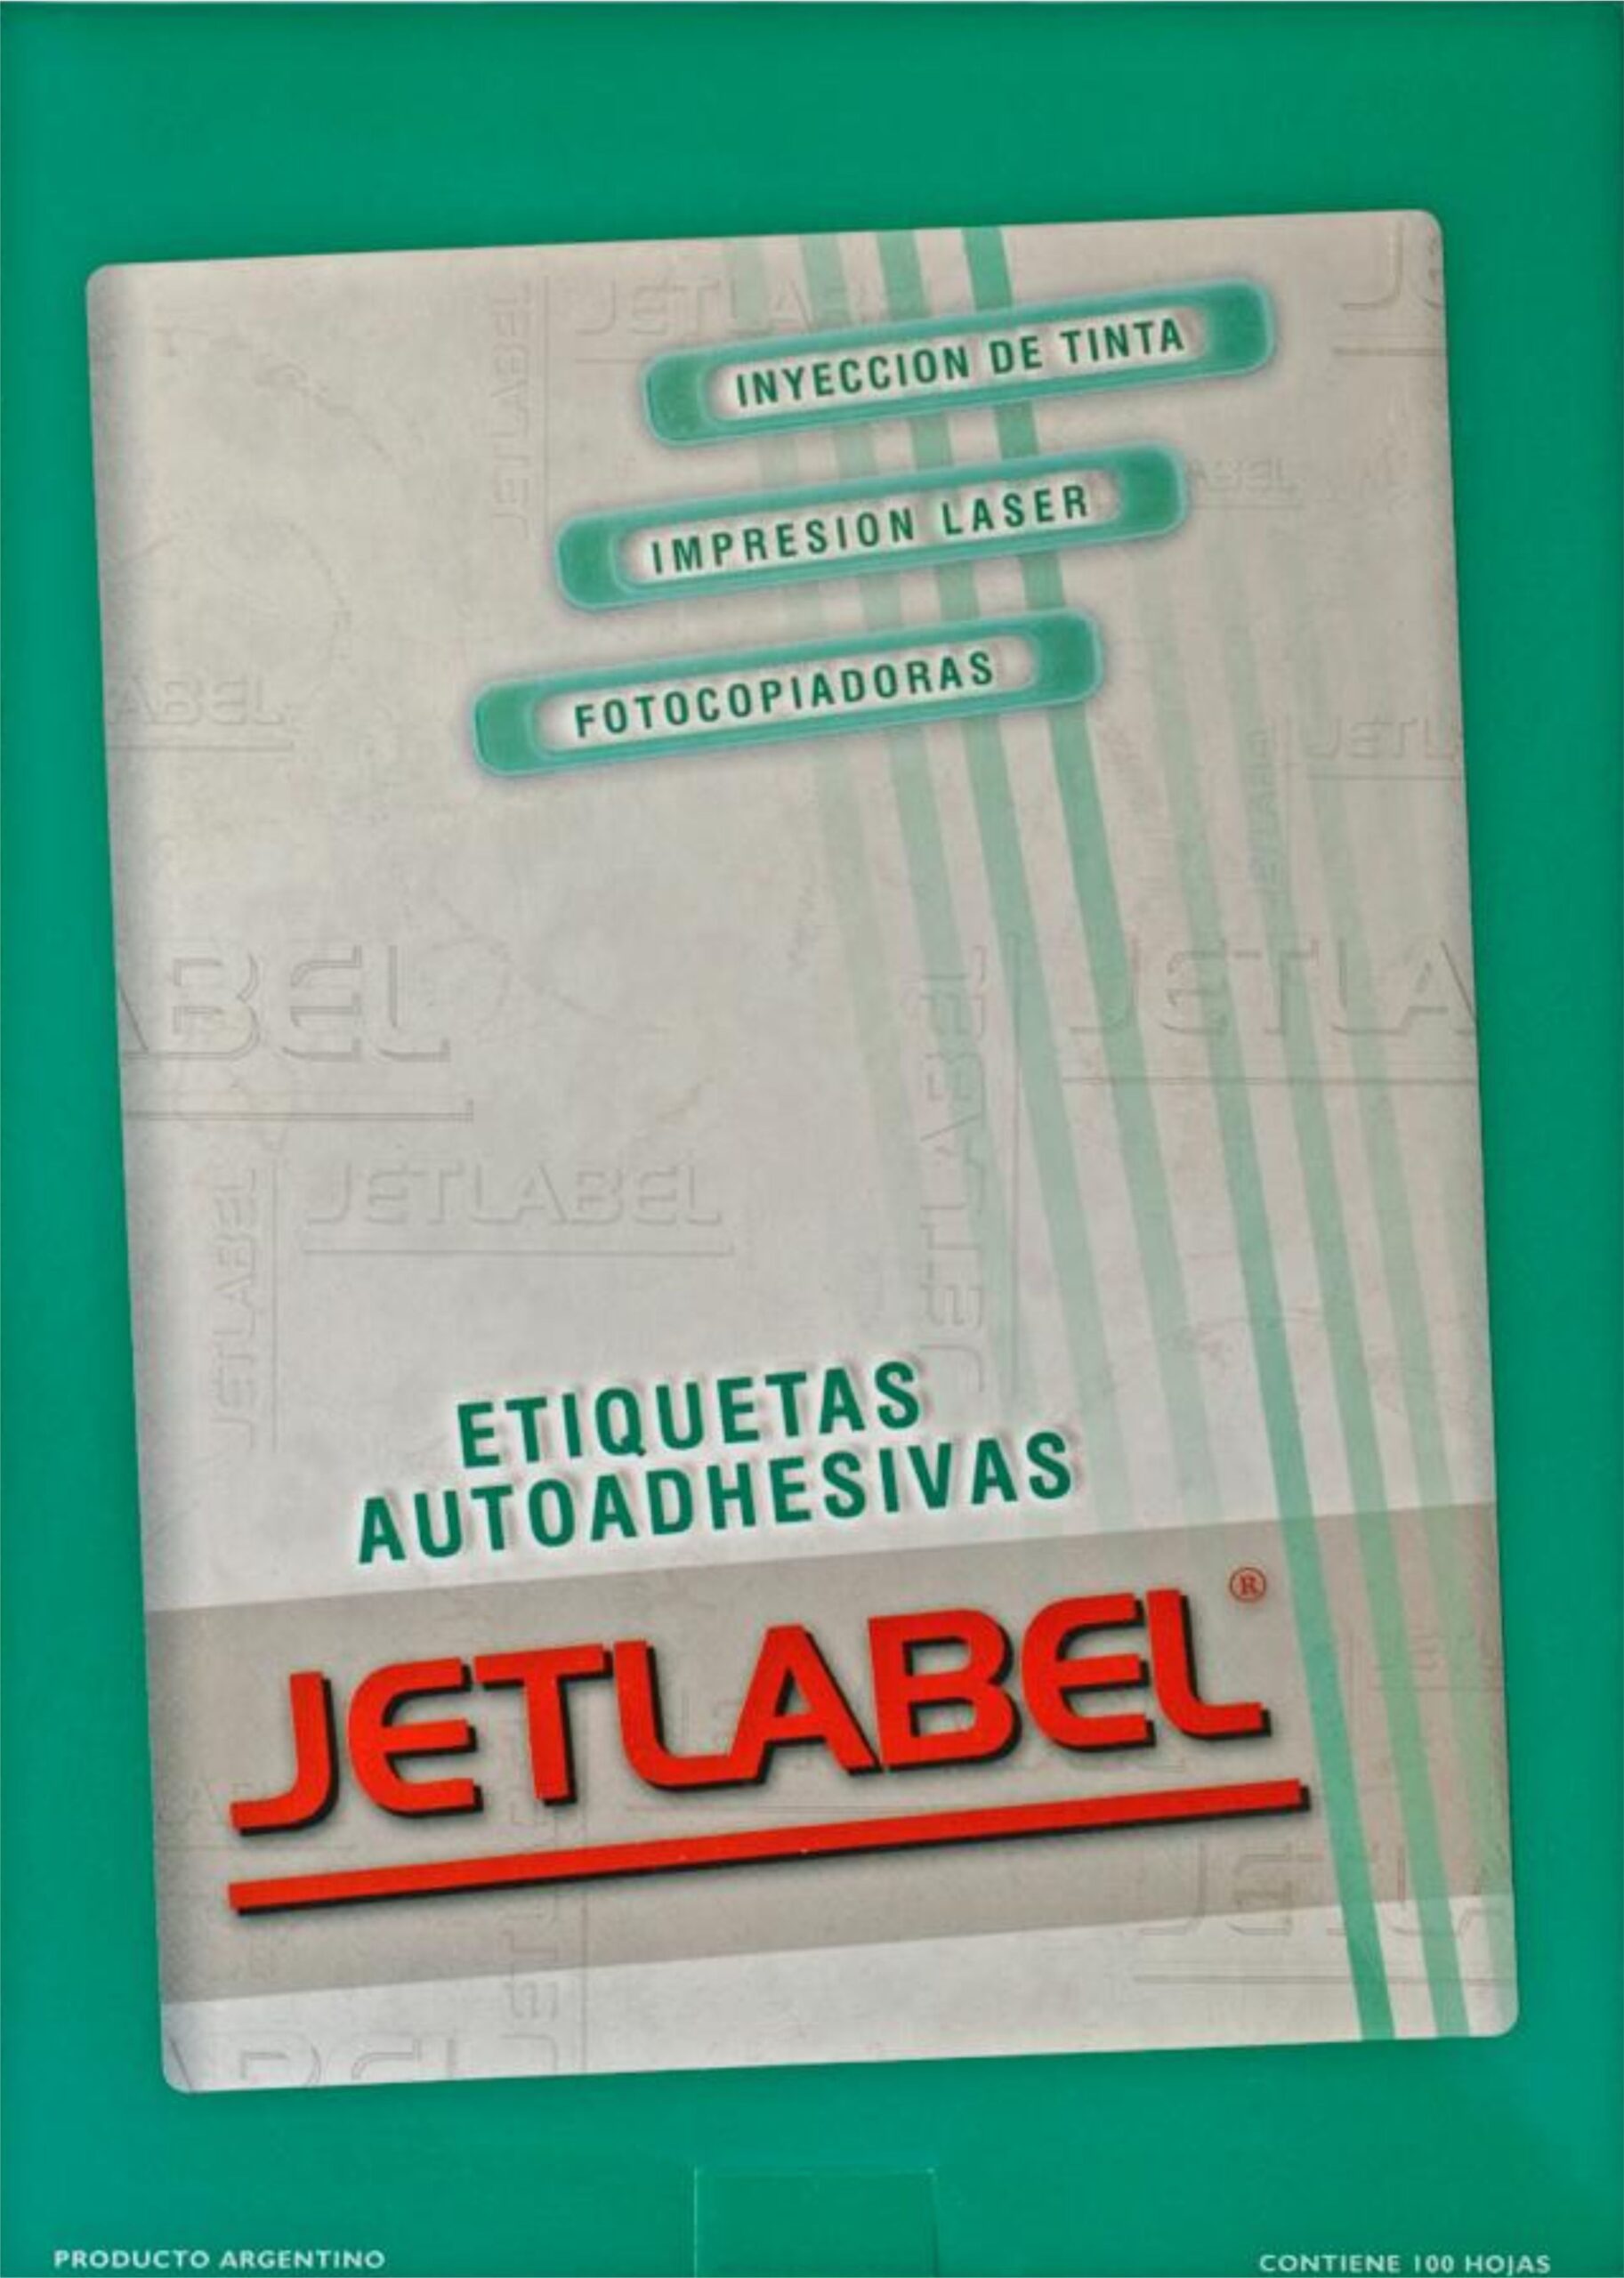 Jetlabel